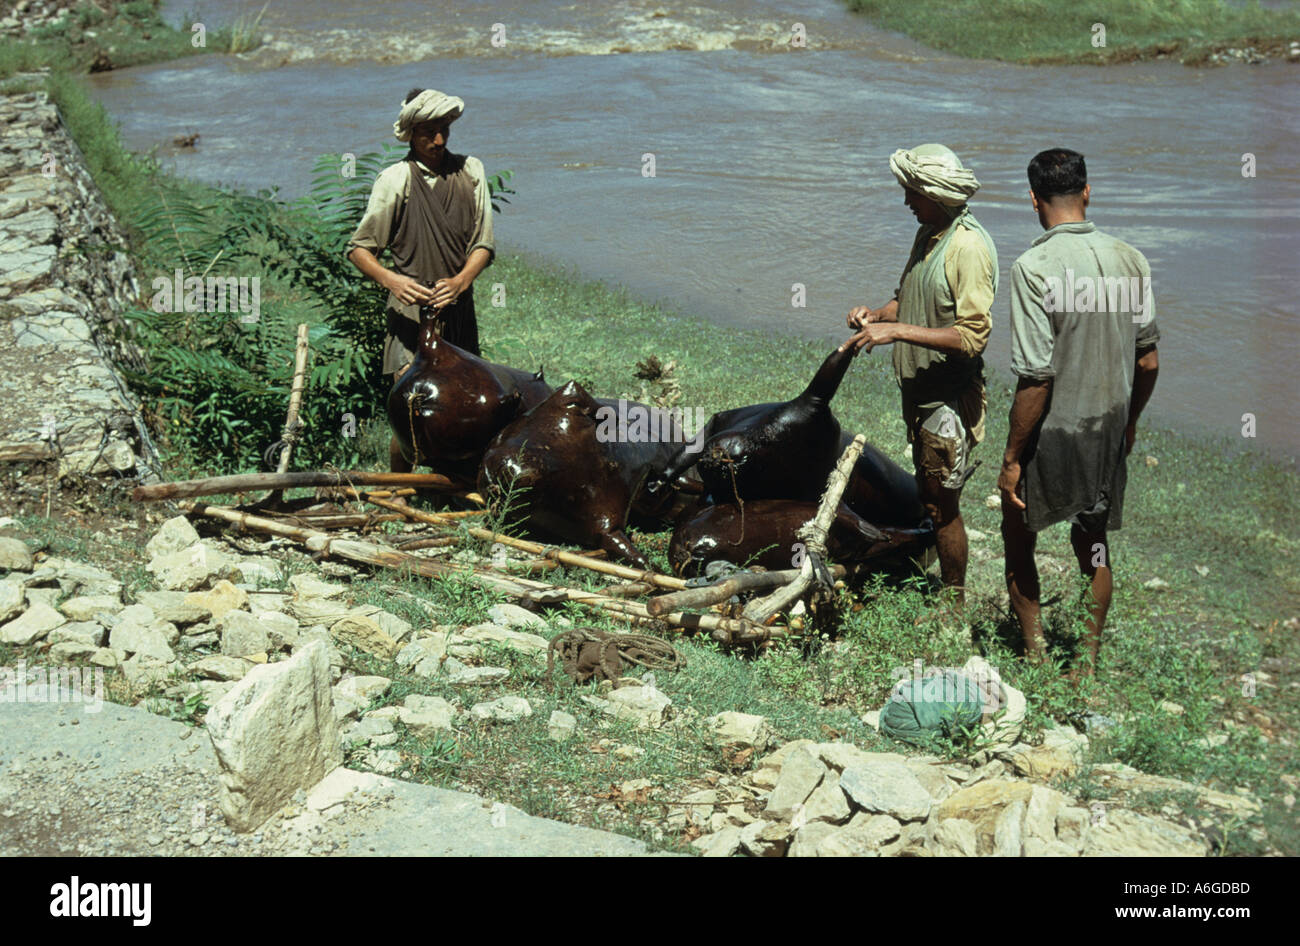 Zak Buffalo skin raft used for fishing and river crossing Mingora Swat Valley River Indus Northwest Pakistan Stock Photo